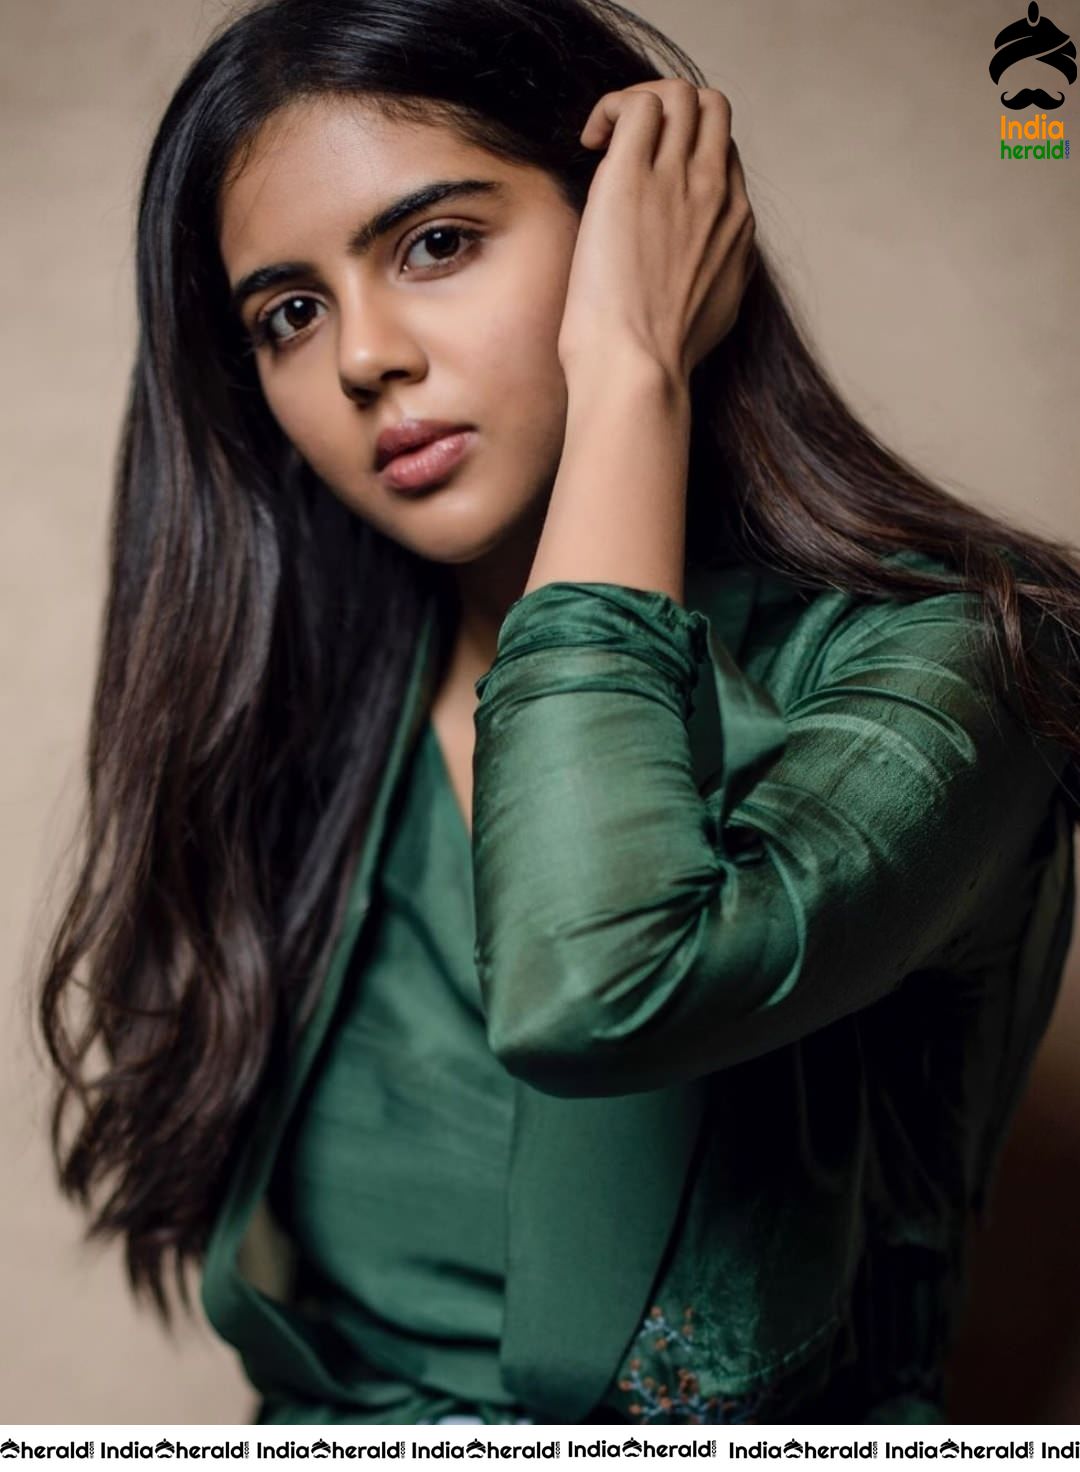 Kalyani Priyadarshan from the promotions of her debut Tamil flick Hero